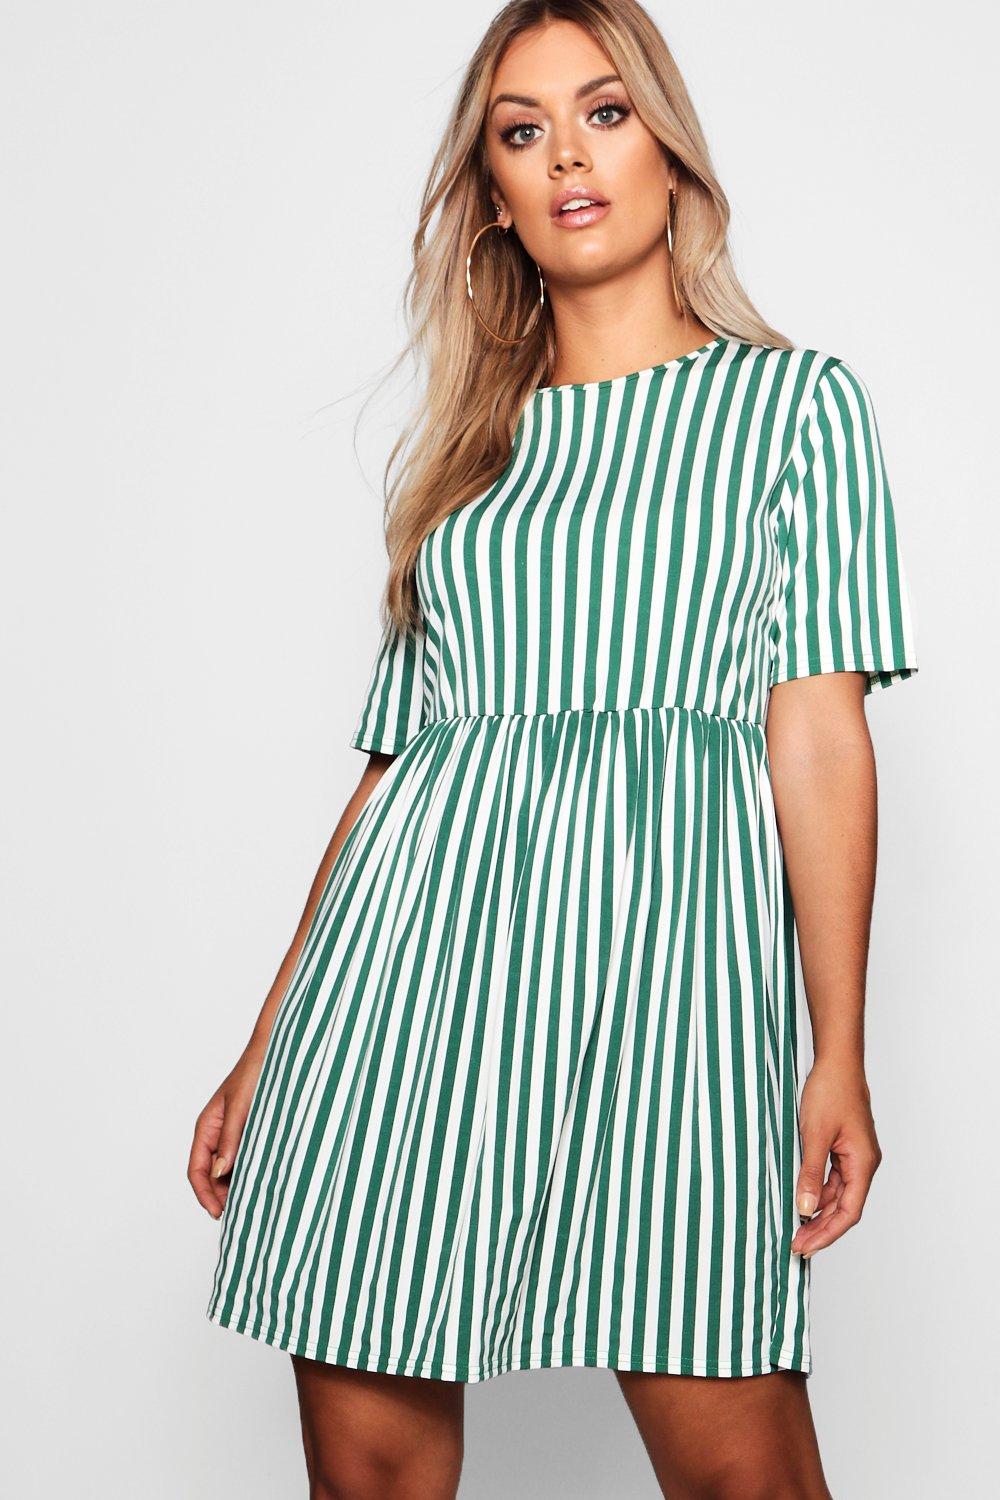 striped smock dress